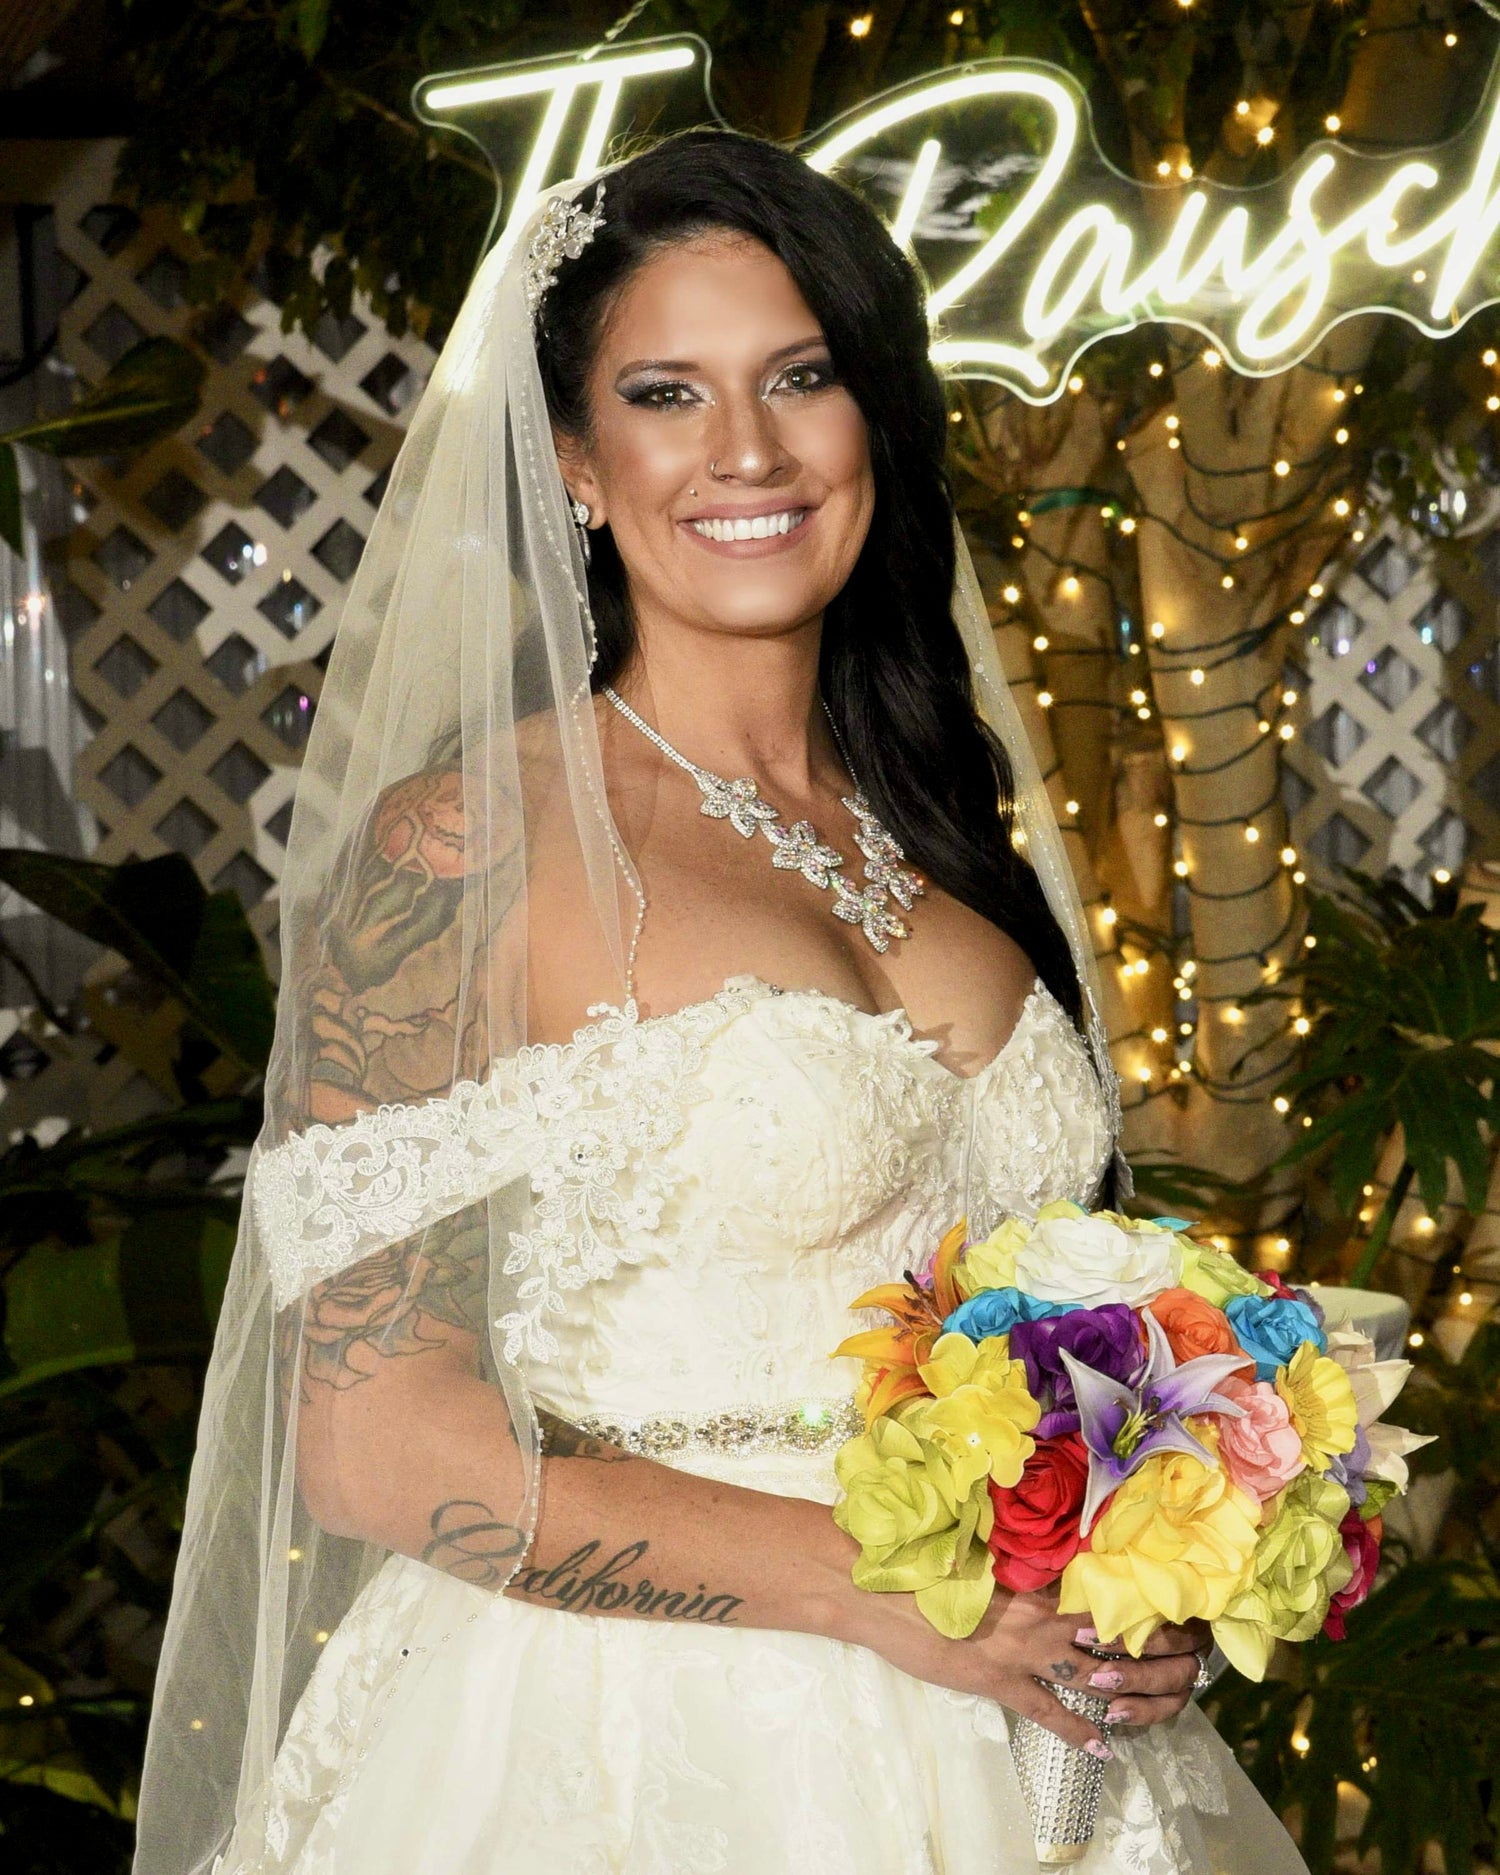 Las Vegas Airbrush Makeup Bride holding bouquet of colorful flowers, iAirbrush Makeup Studio